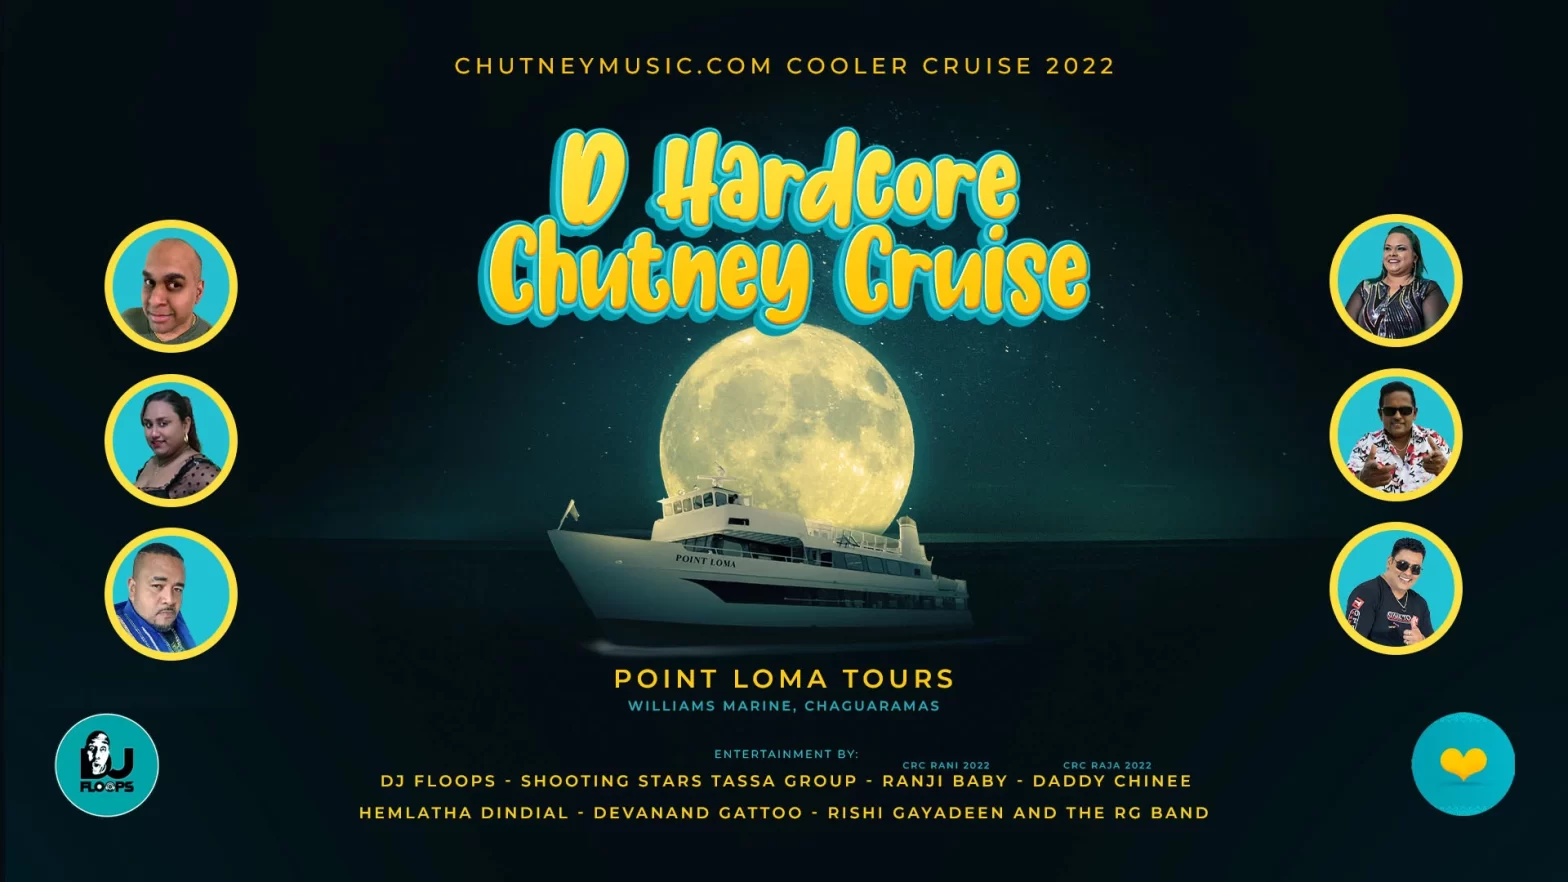 D Hardcore Chutney Cruise - Cover